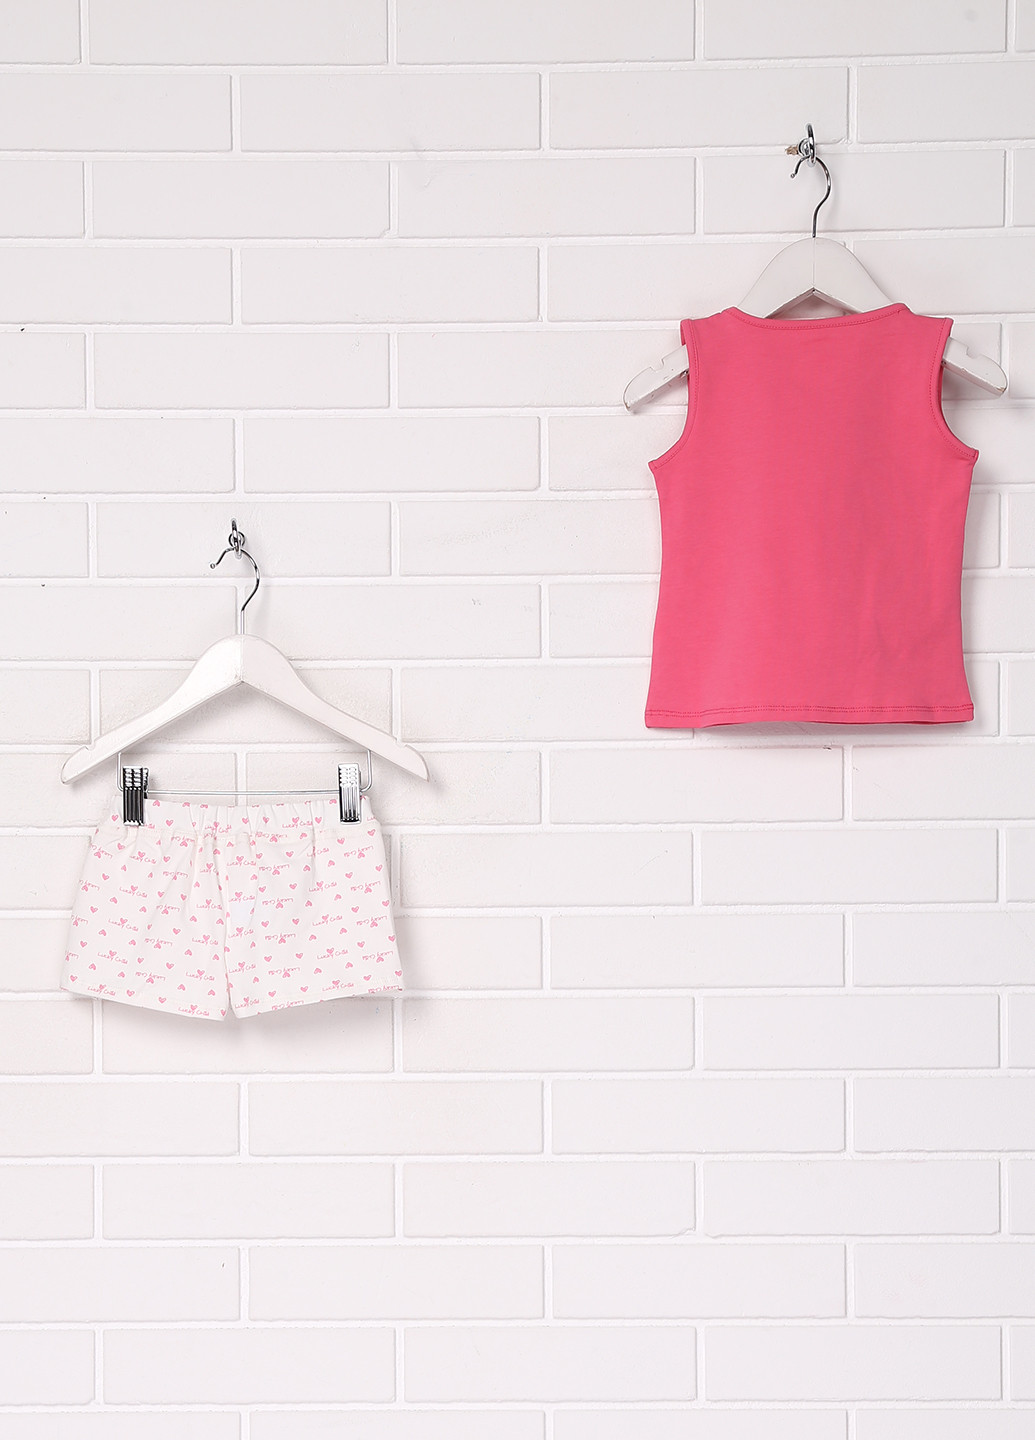 Розовая всесезон пижама (майка, шорты) Соня